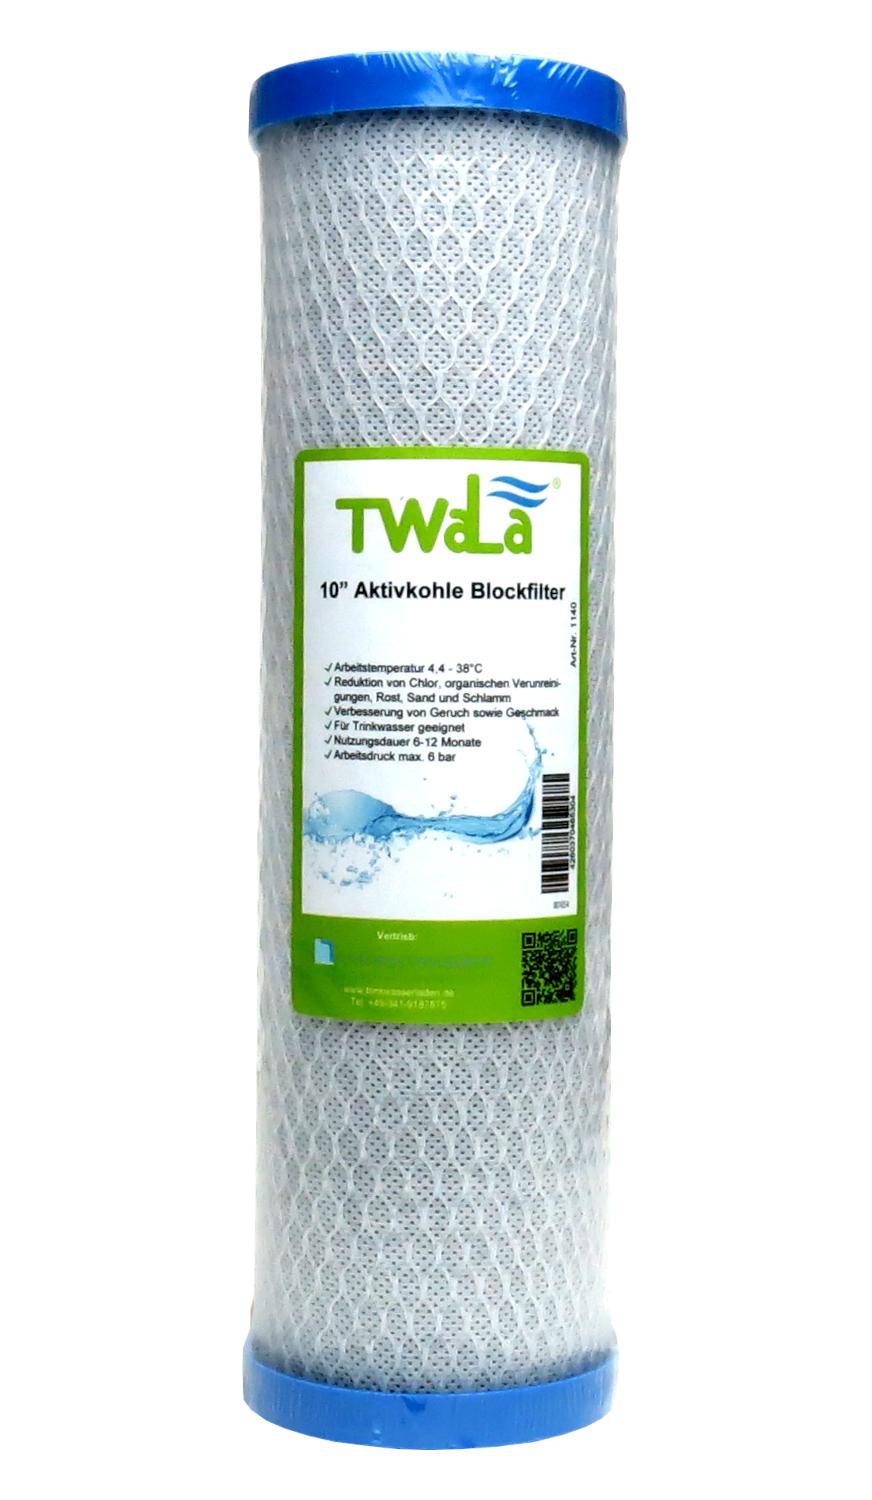 TWaLa Aktivkohleblock 10 Zoll Wasserfilter